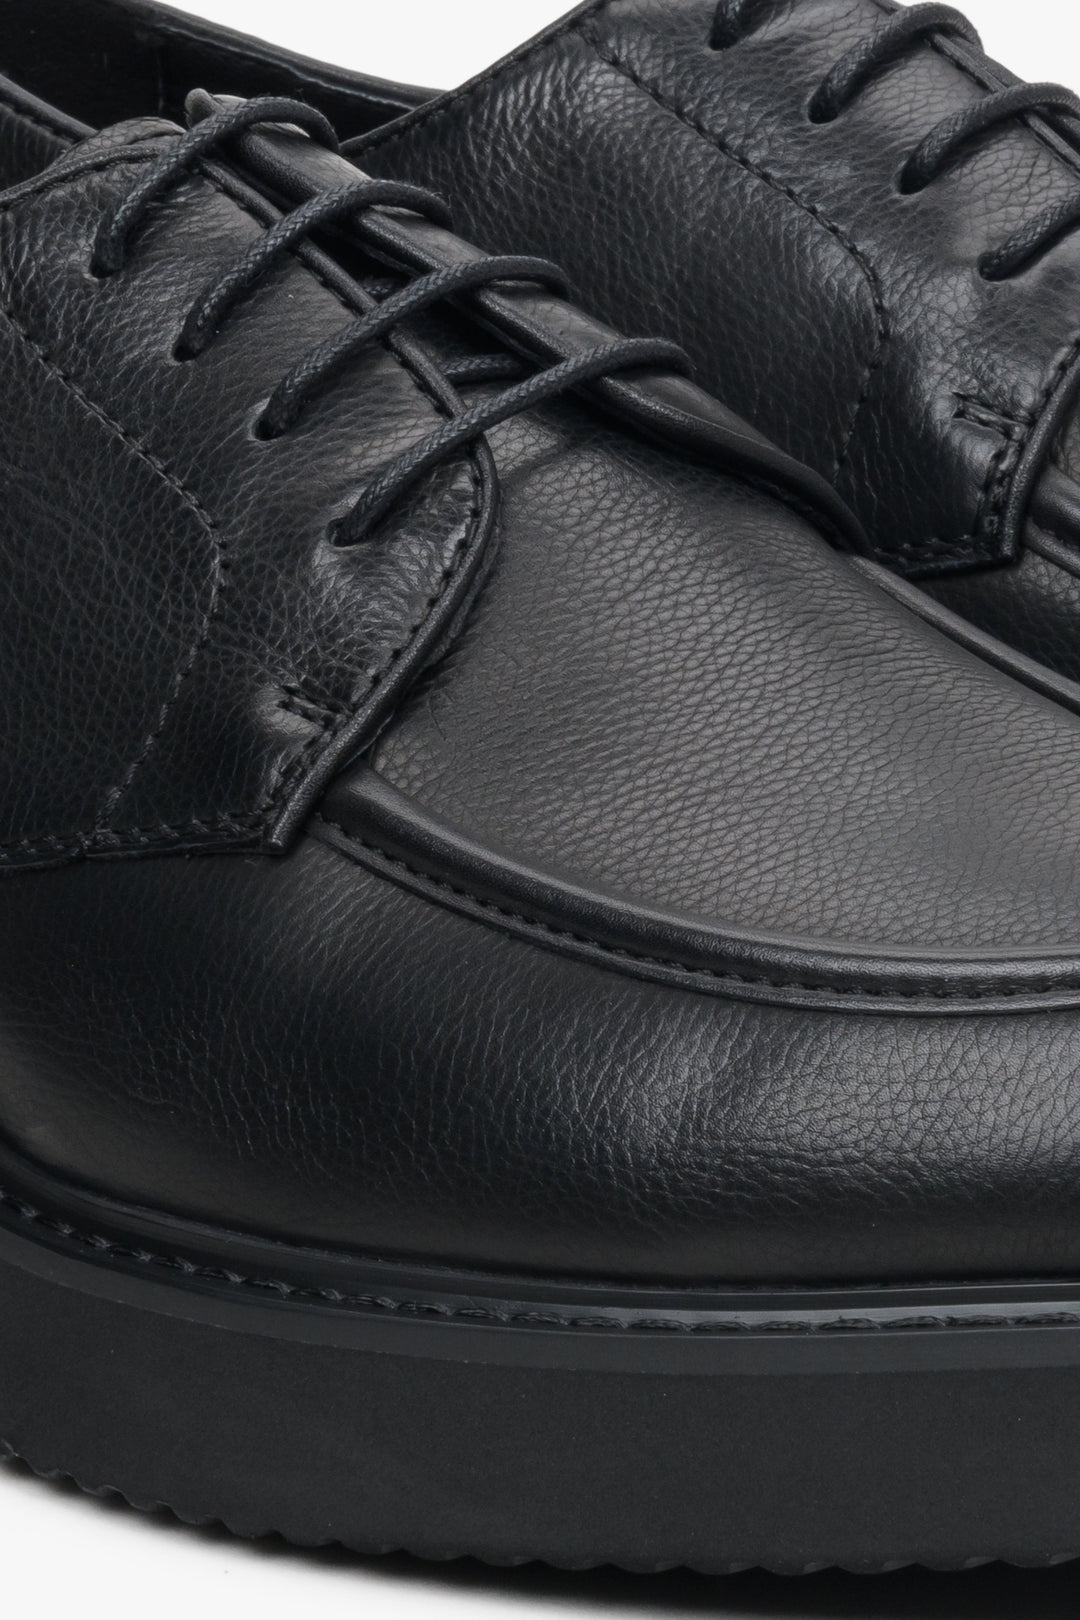 Men's black leather Estro brogues - close-up on the details.